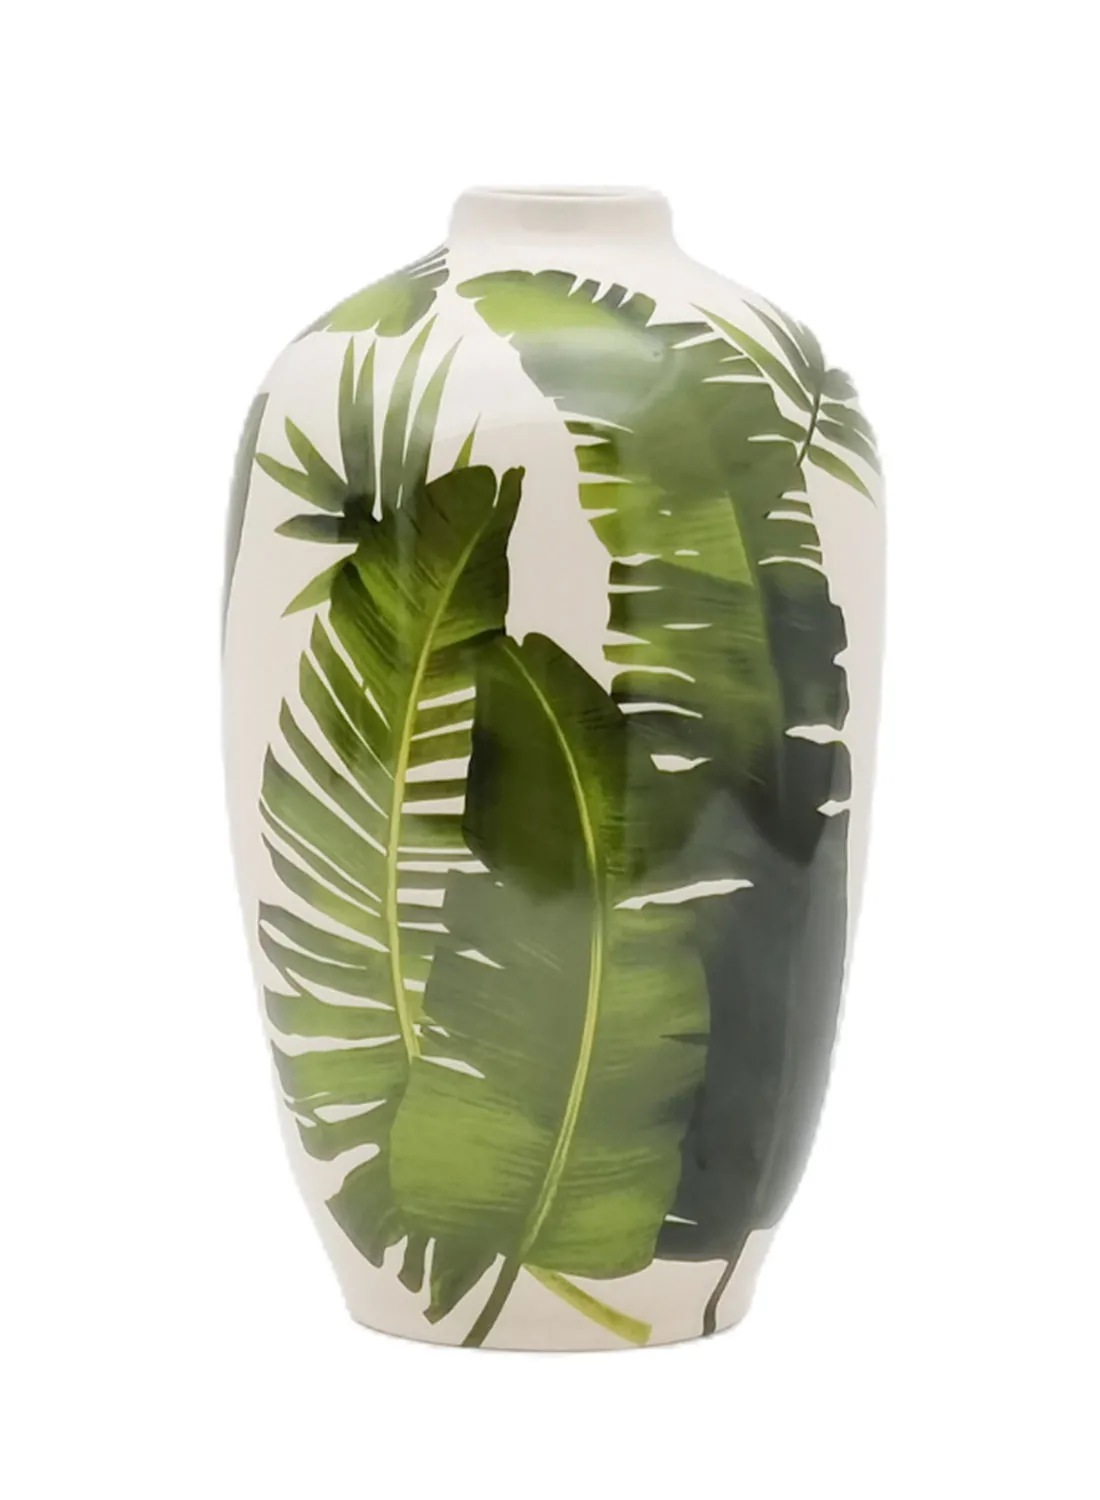 ebb & flow Elegant Design Ceramic Vase Unique Luxury Quality Material For The Perfect Stylish Home N13-016 Green 24.5 x 42cm